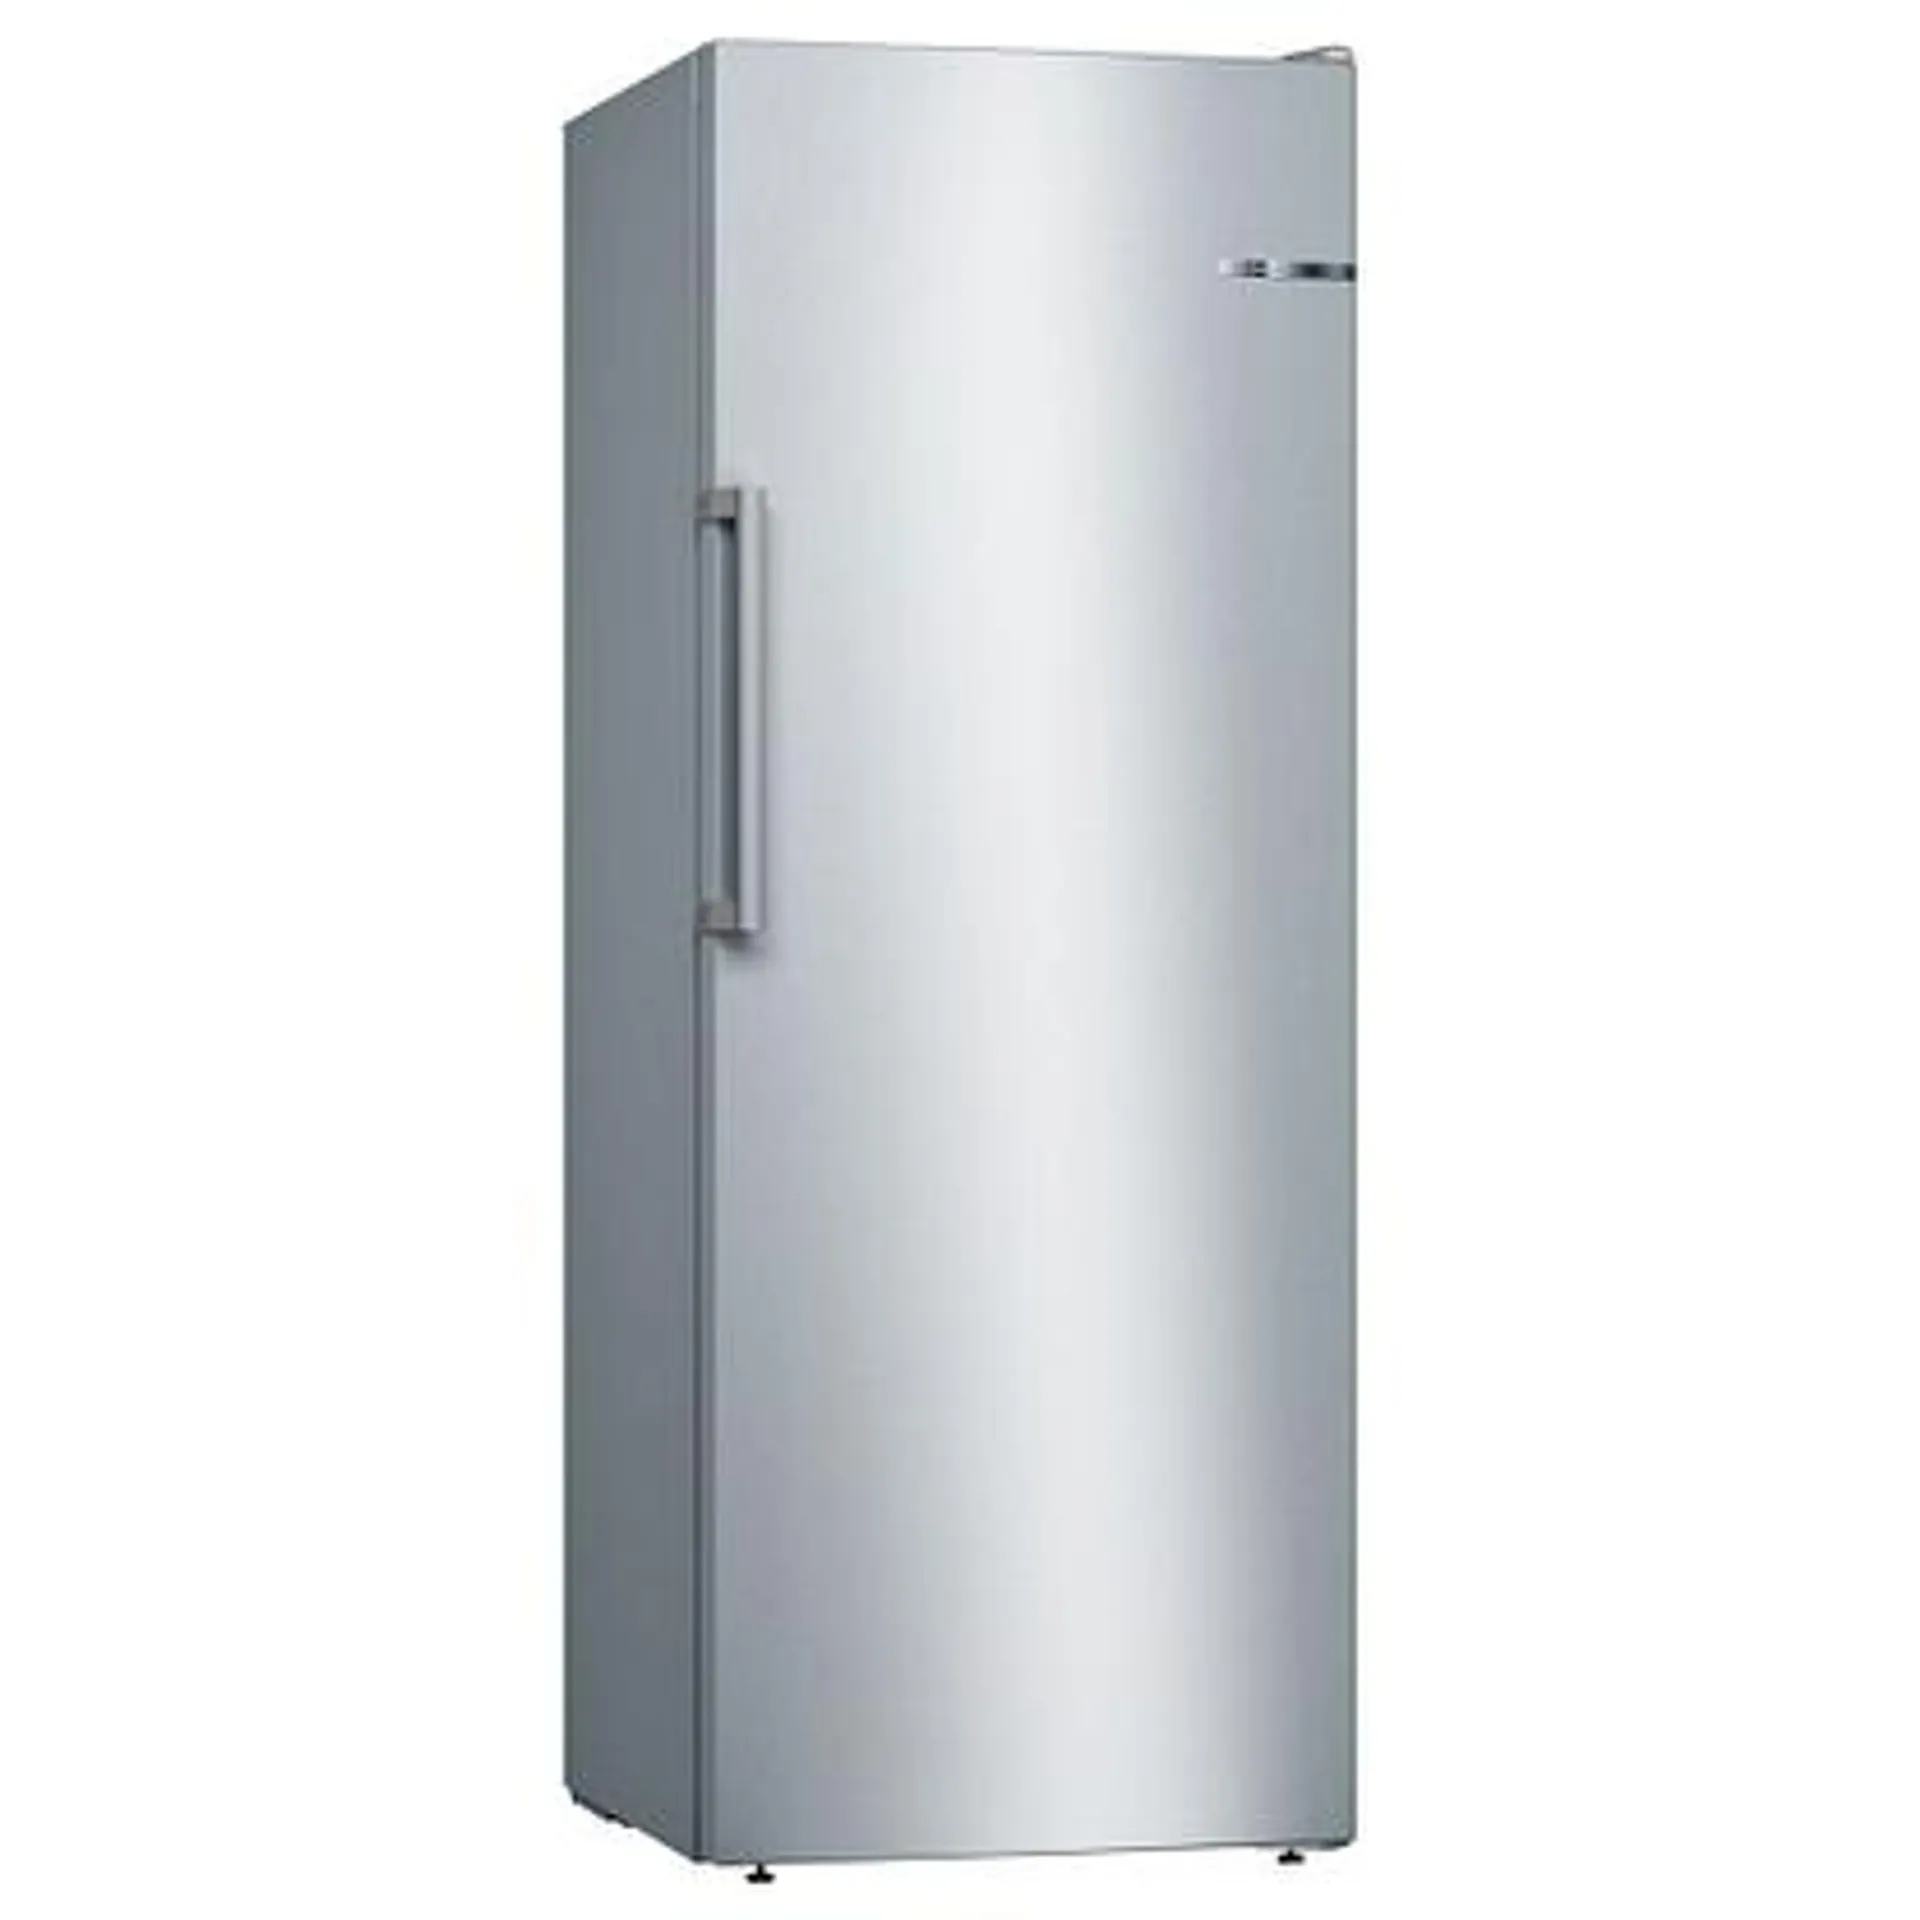 Bosch GSN29VLEP 60cm Series 4 Freestanding Frost Free Freezer – SILVER